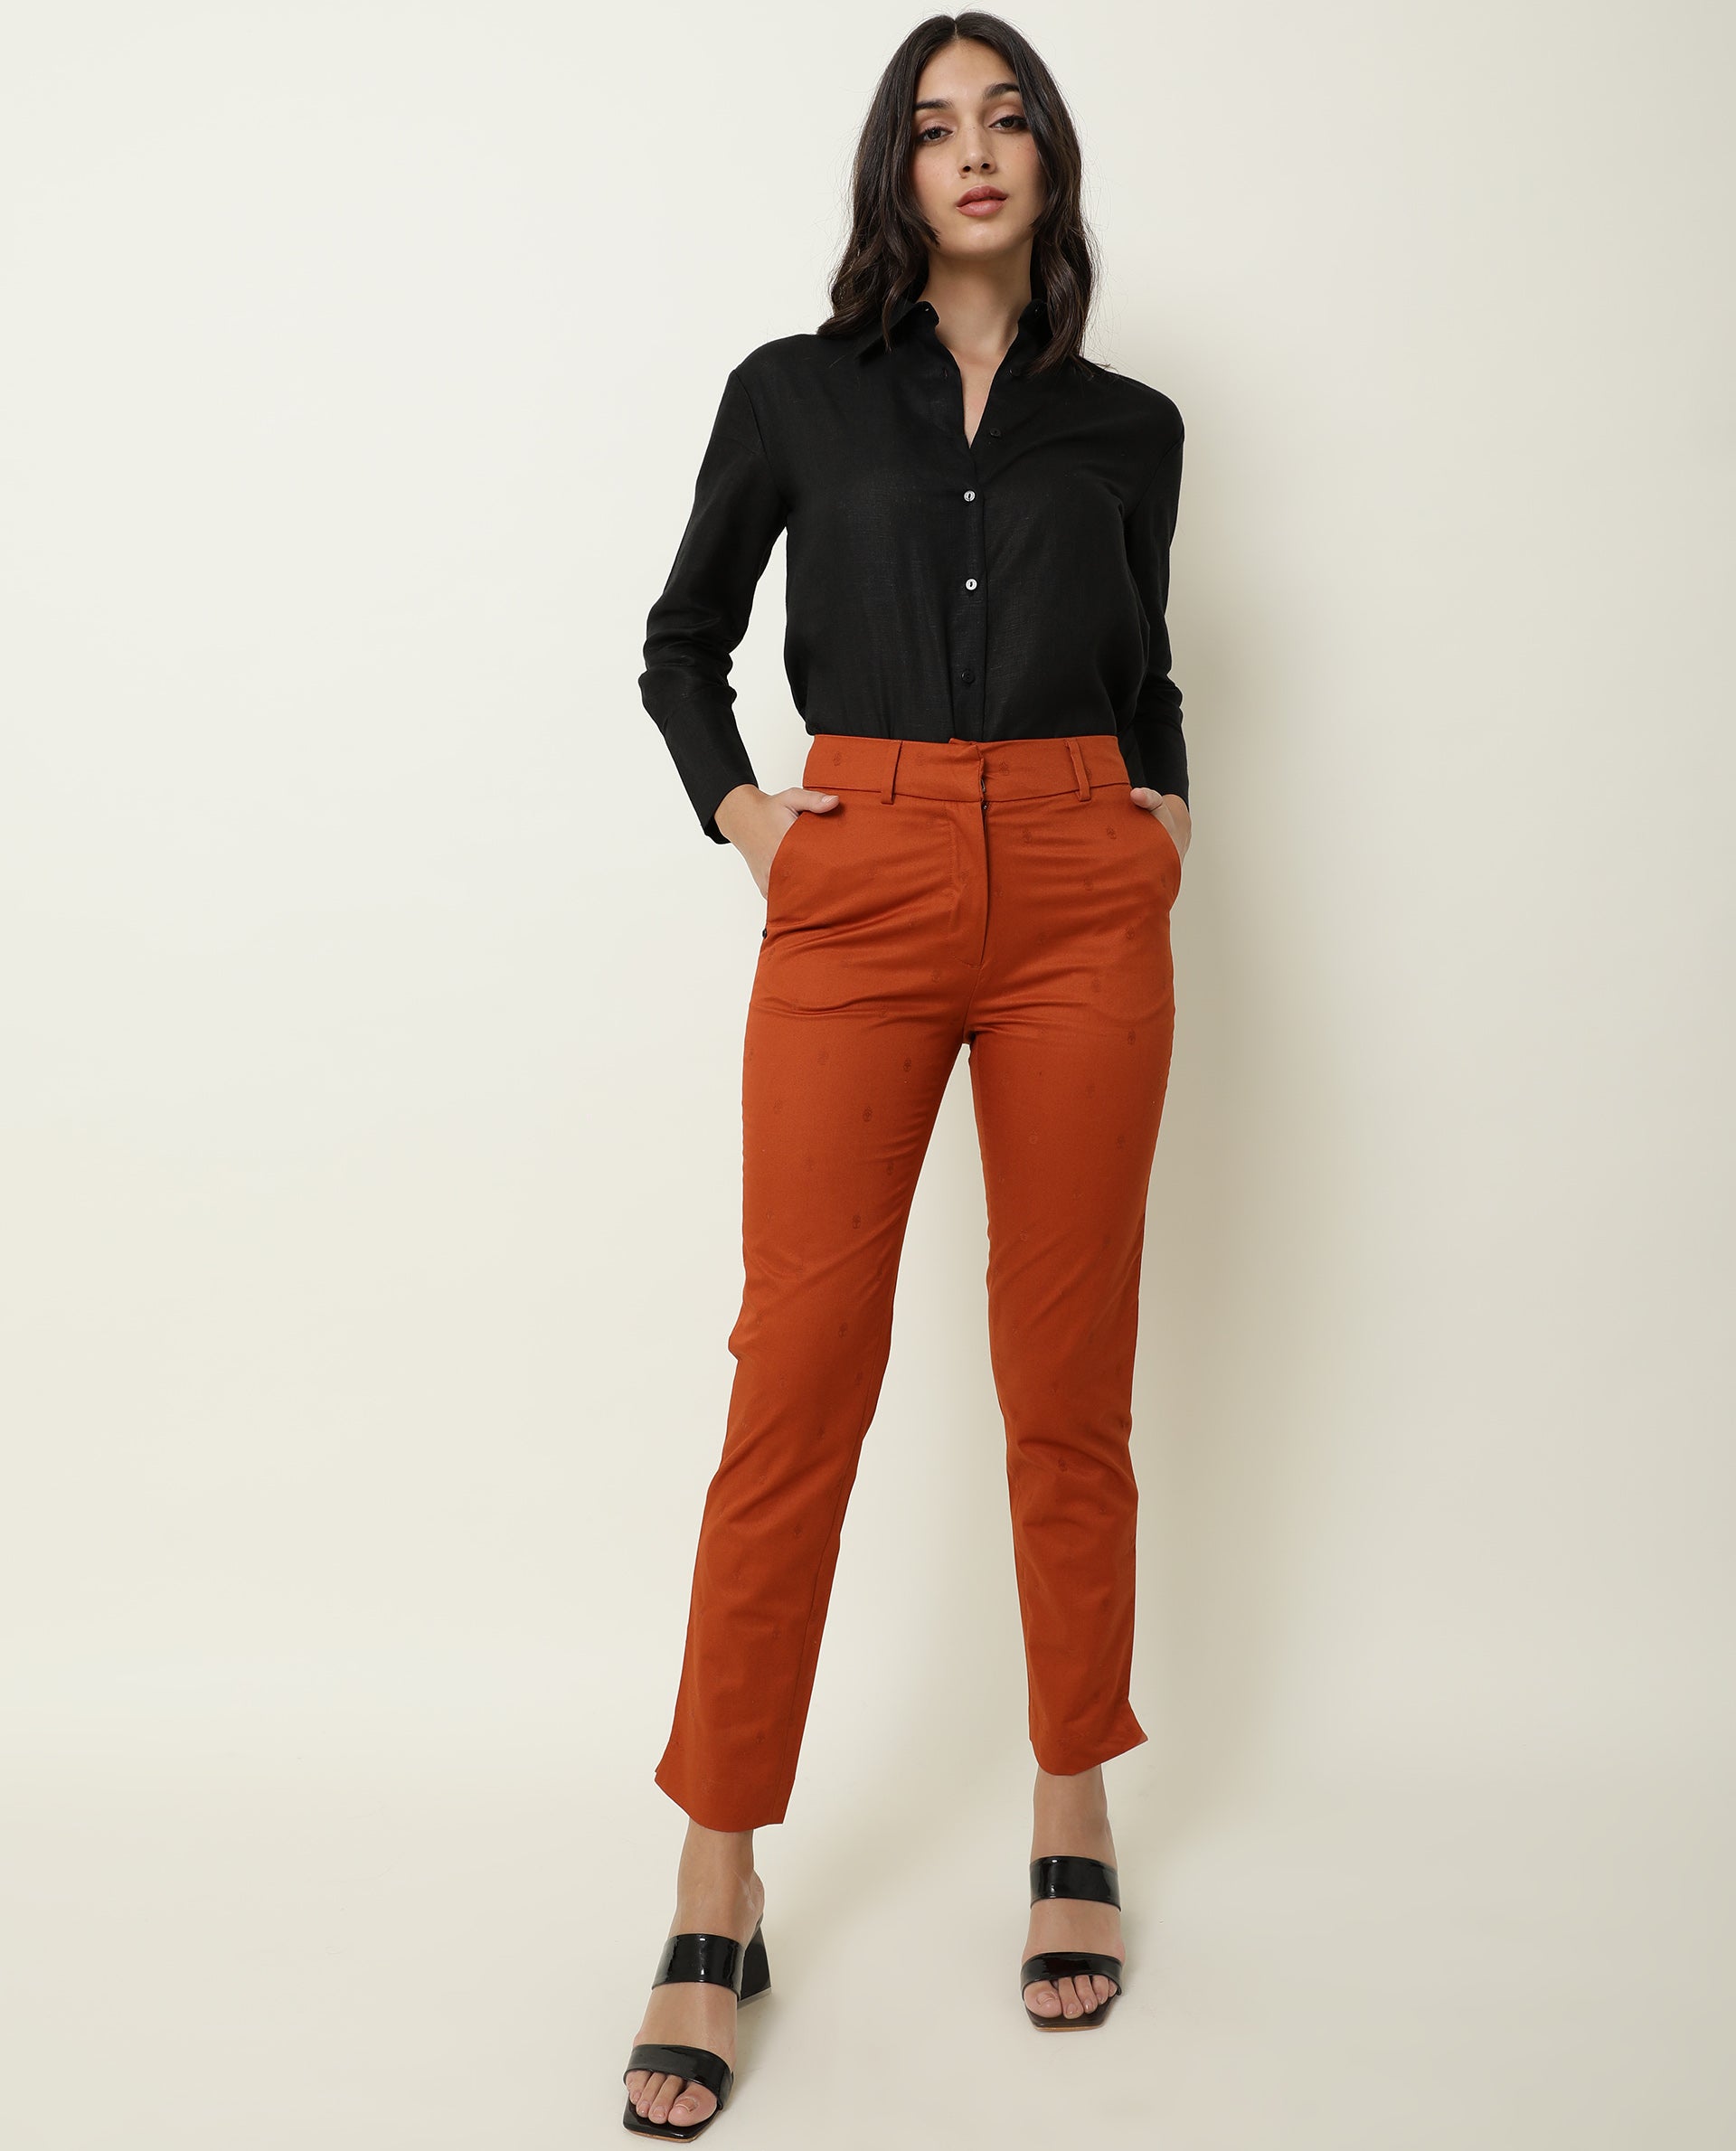 Casual Plain Wide Leg Burnt Orange Women's Pants (Women's) - Walmart.com